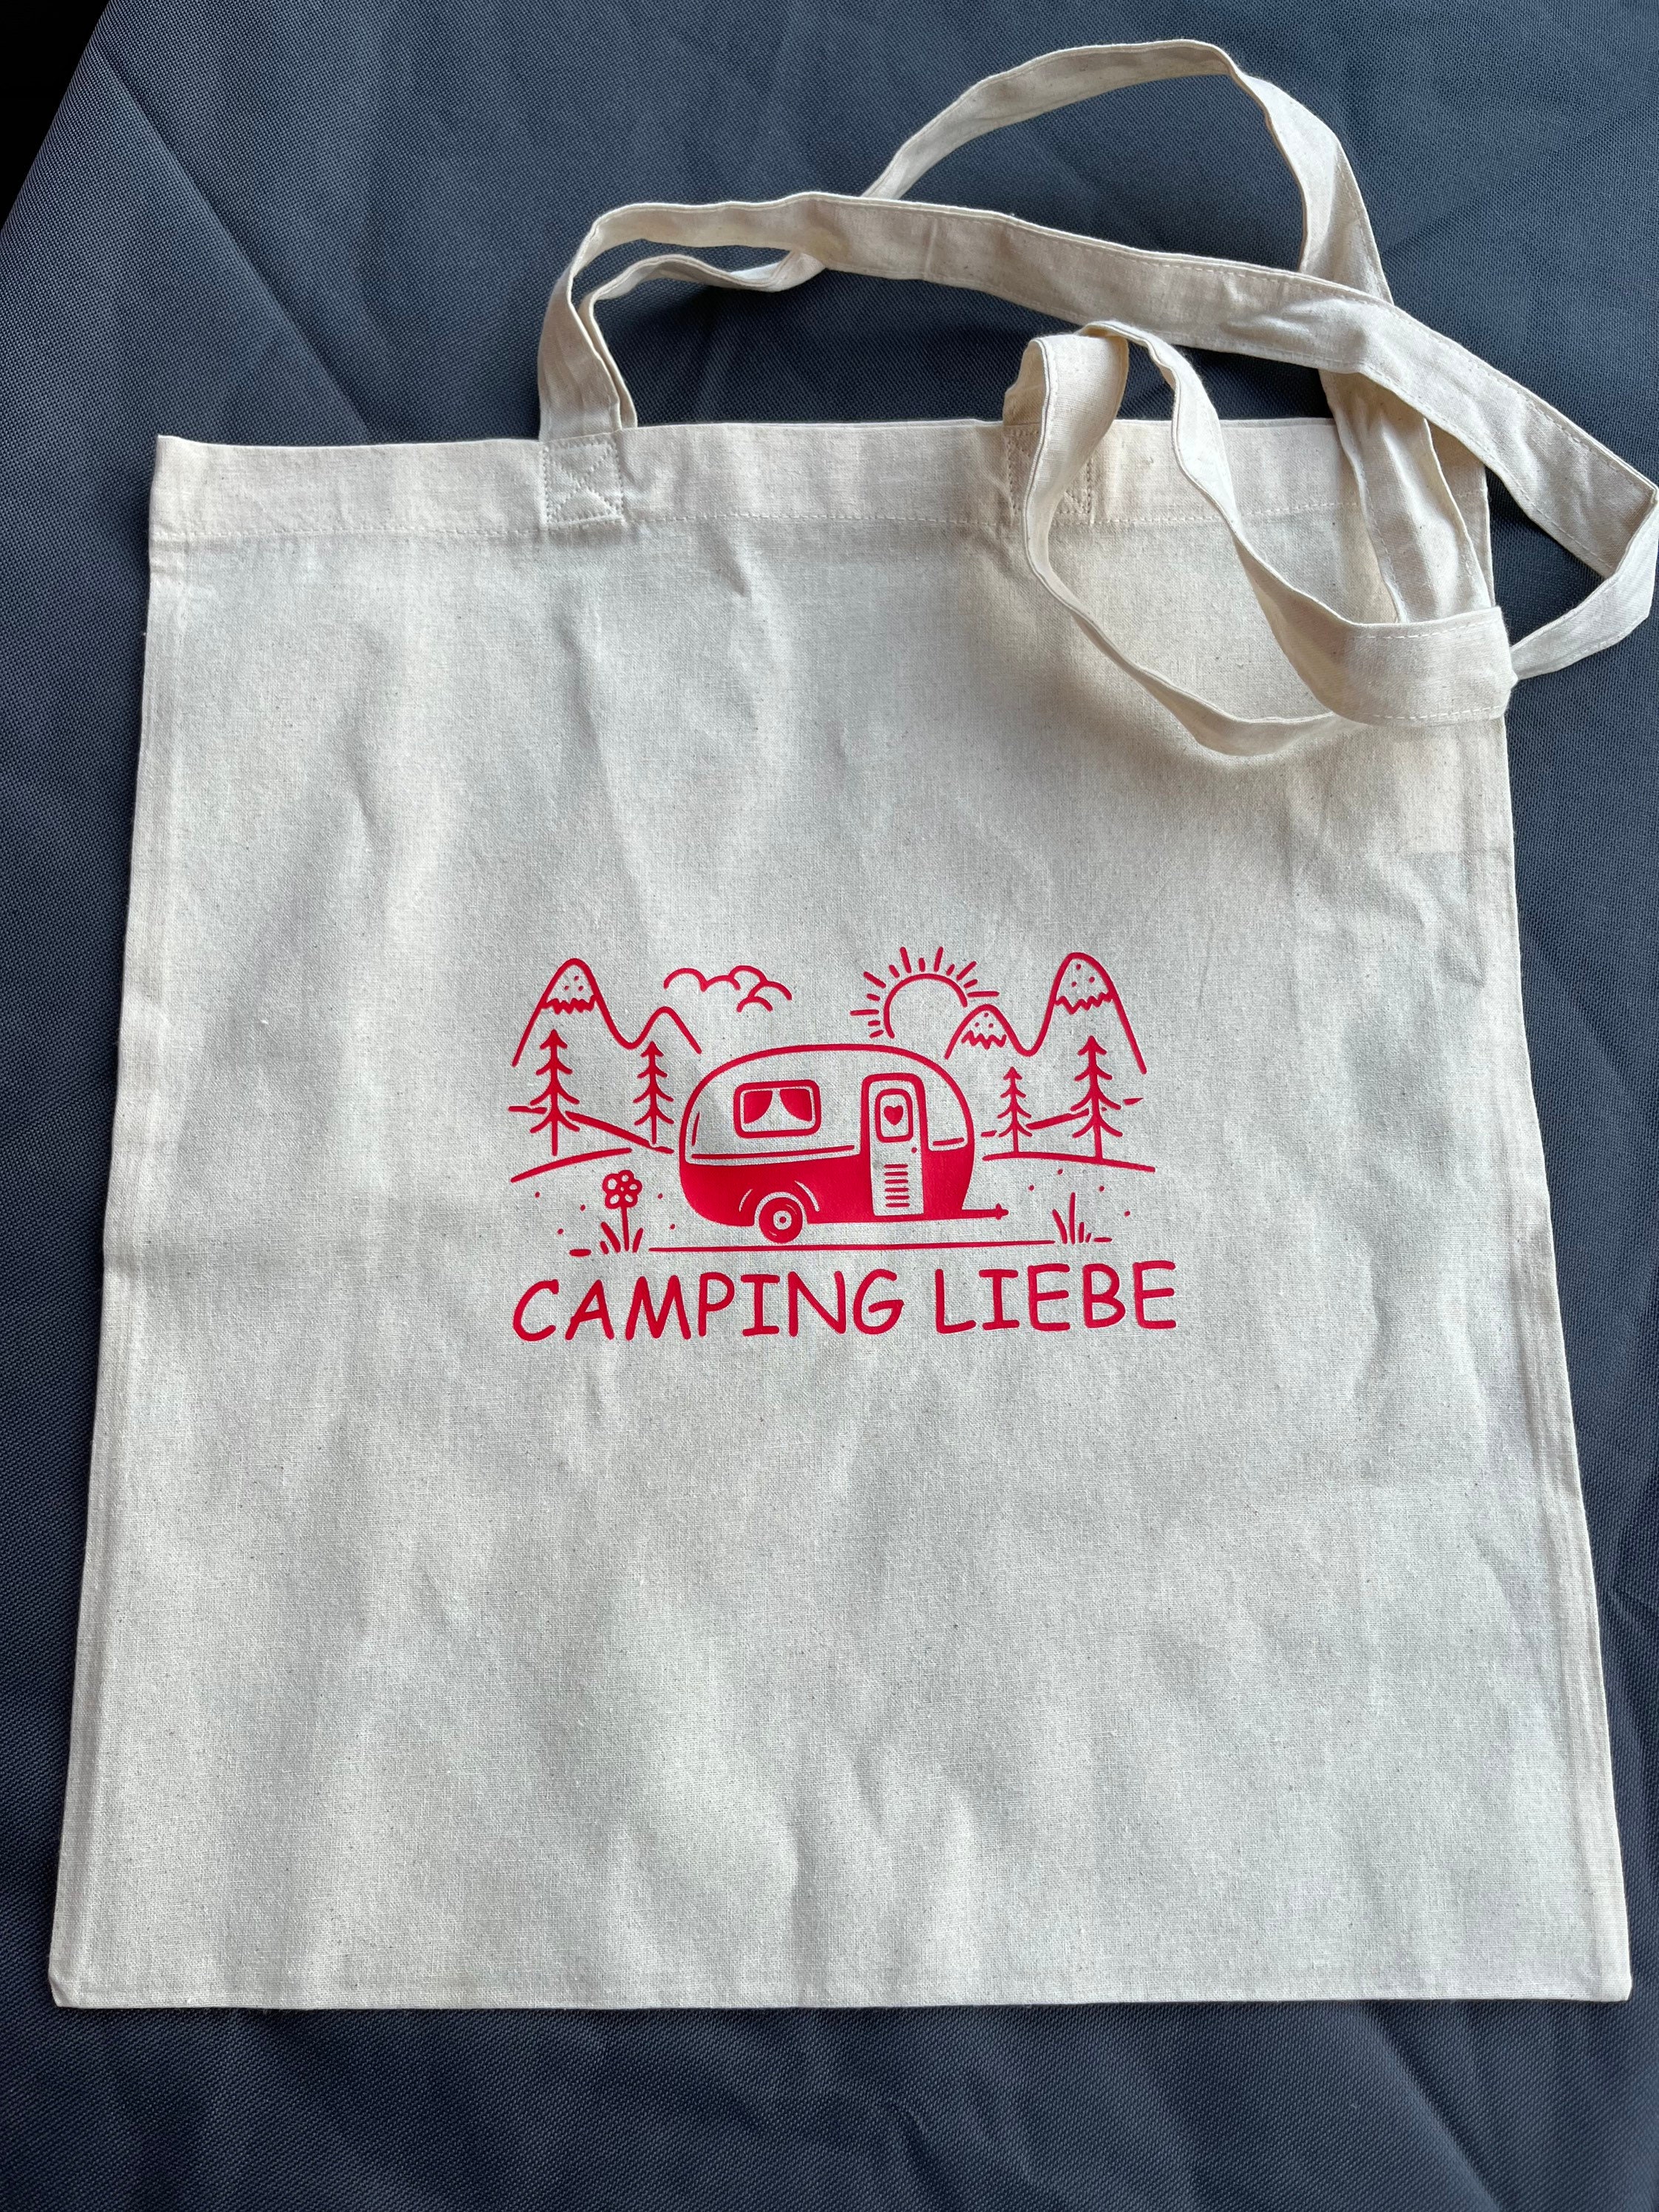 Camping tasche - .de